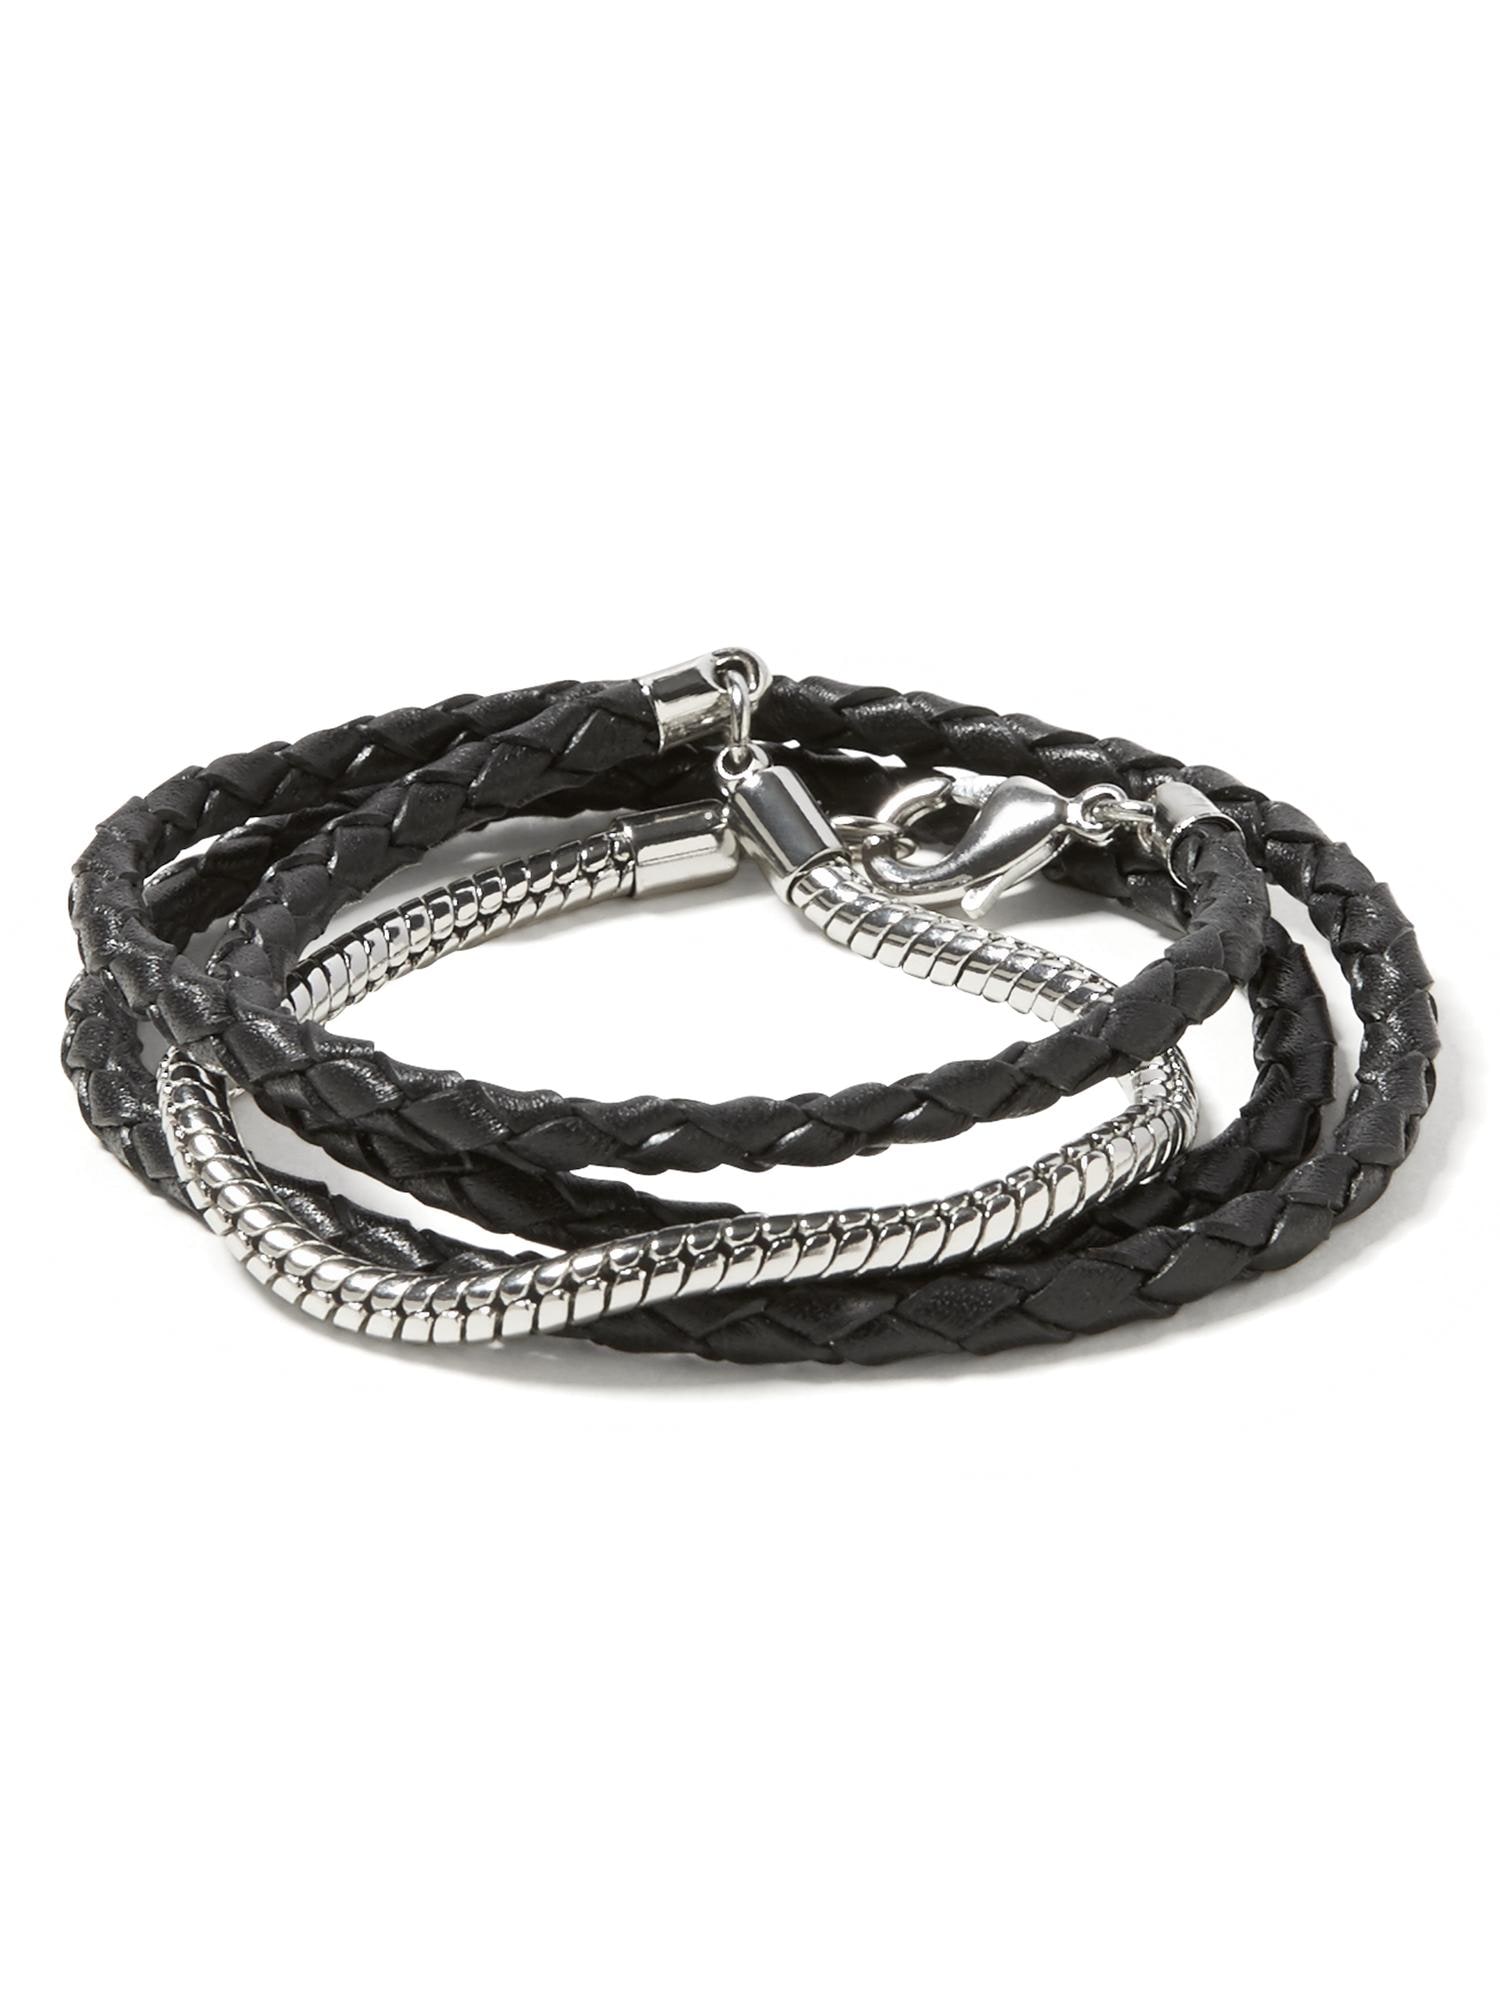 Leather Snake Chain Bracelet